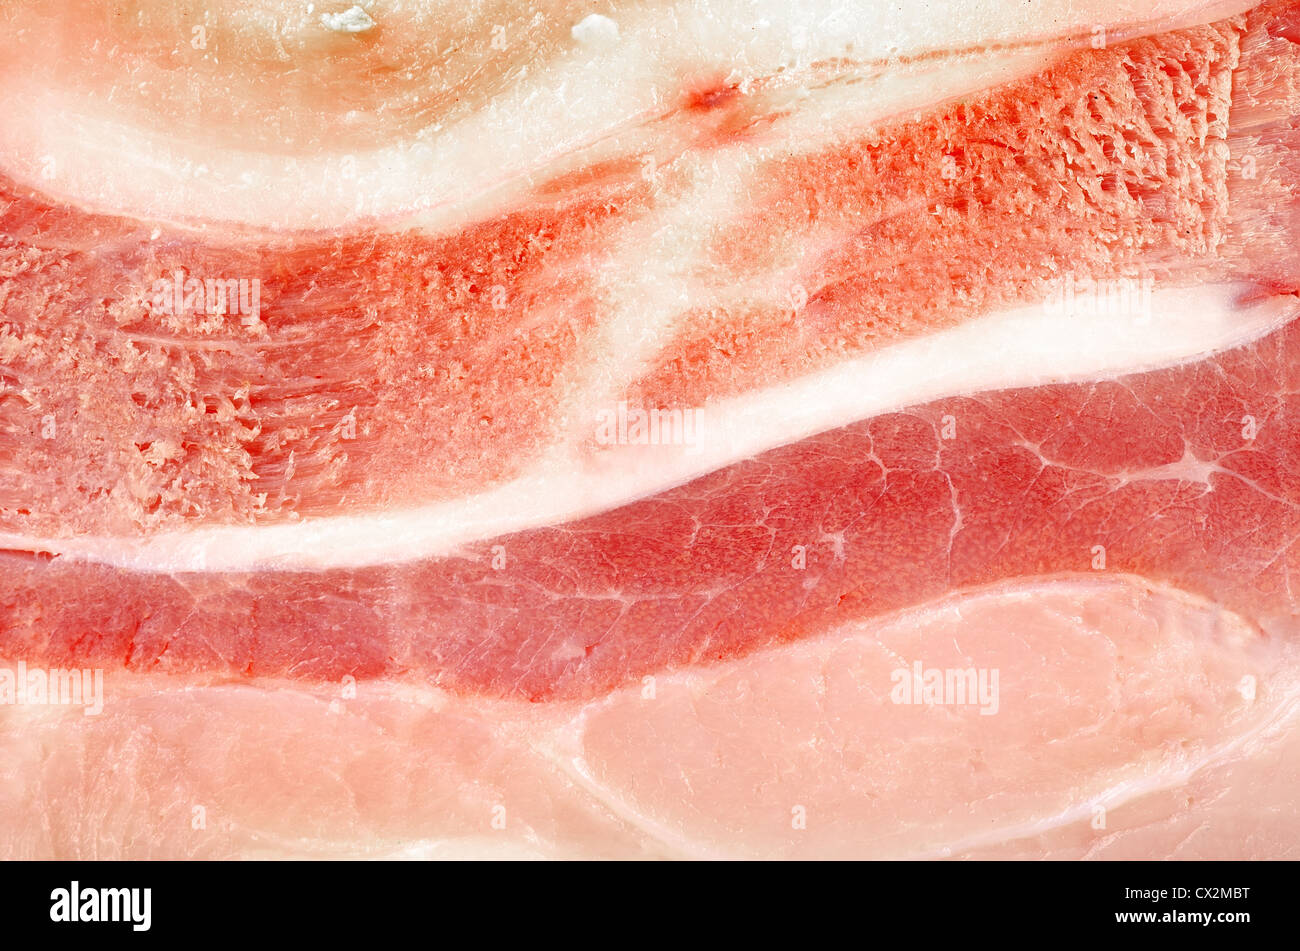 Smoked pork bacon. Background of smoked meat Stock Photo